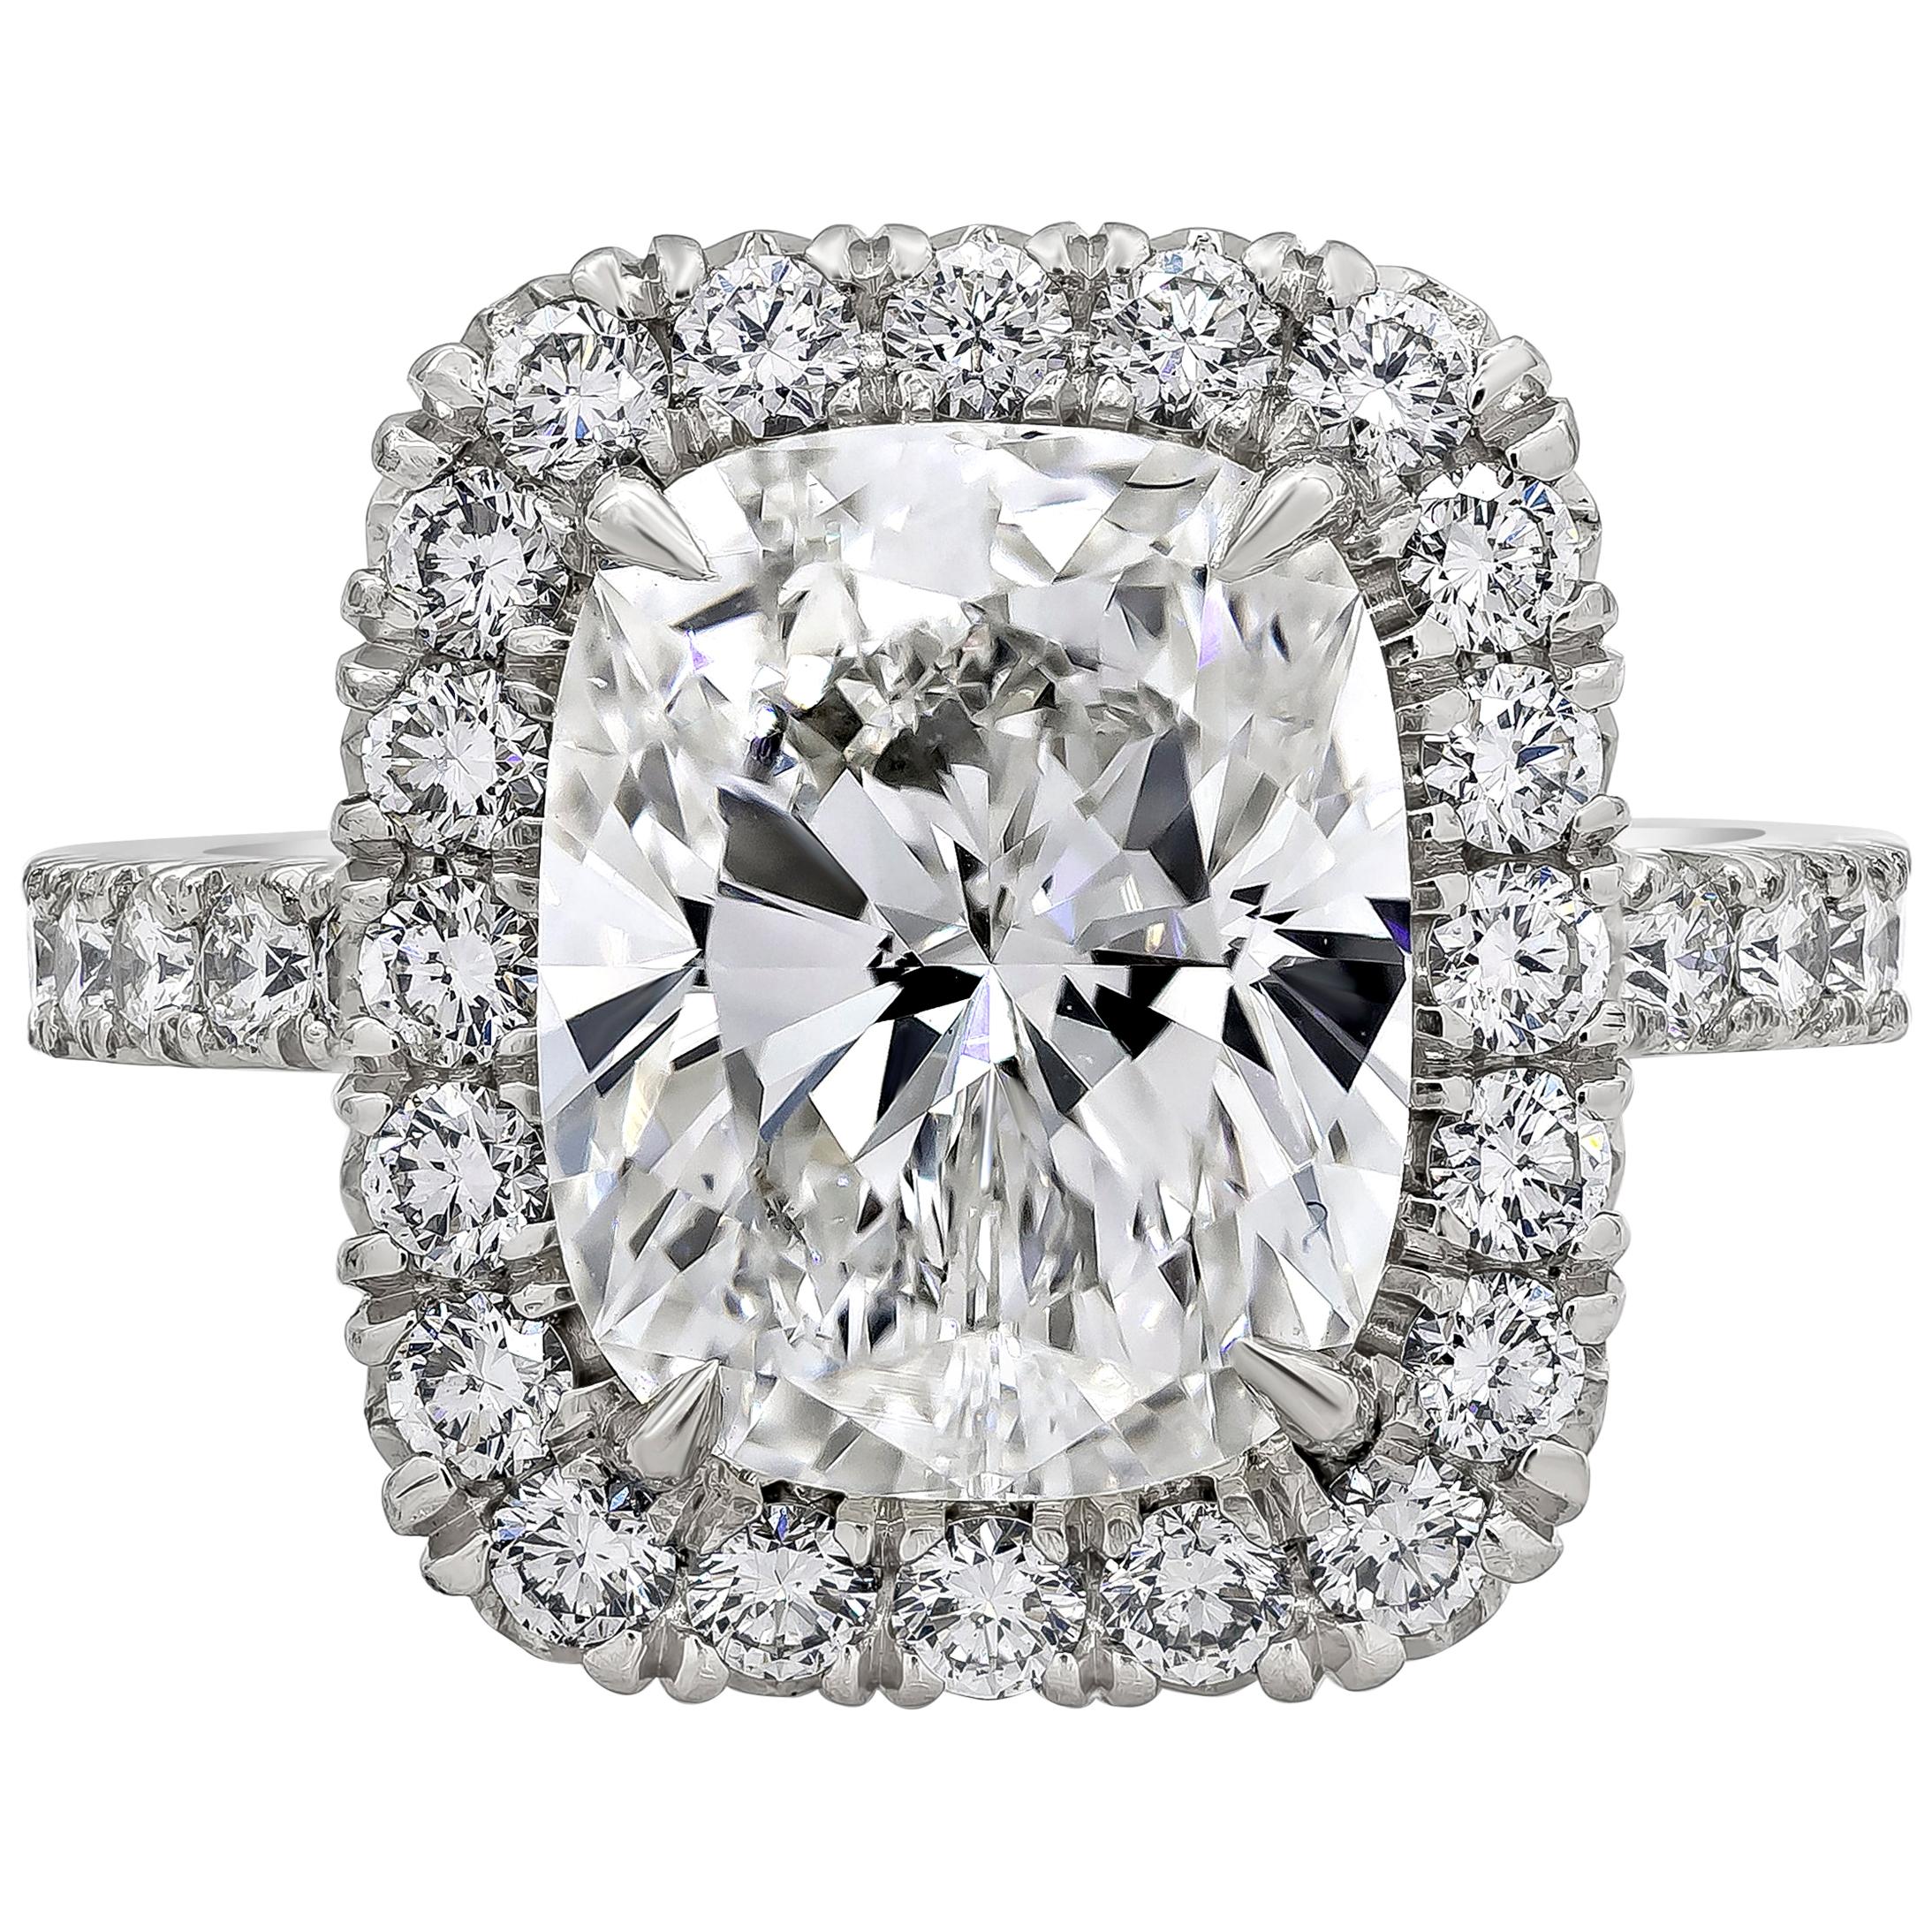 Roman Malakov GIA Certified 5.01 Carat Cushion Cut Diamond Halo Engagement Ring